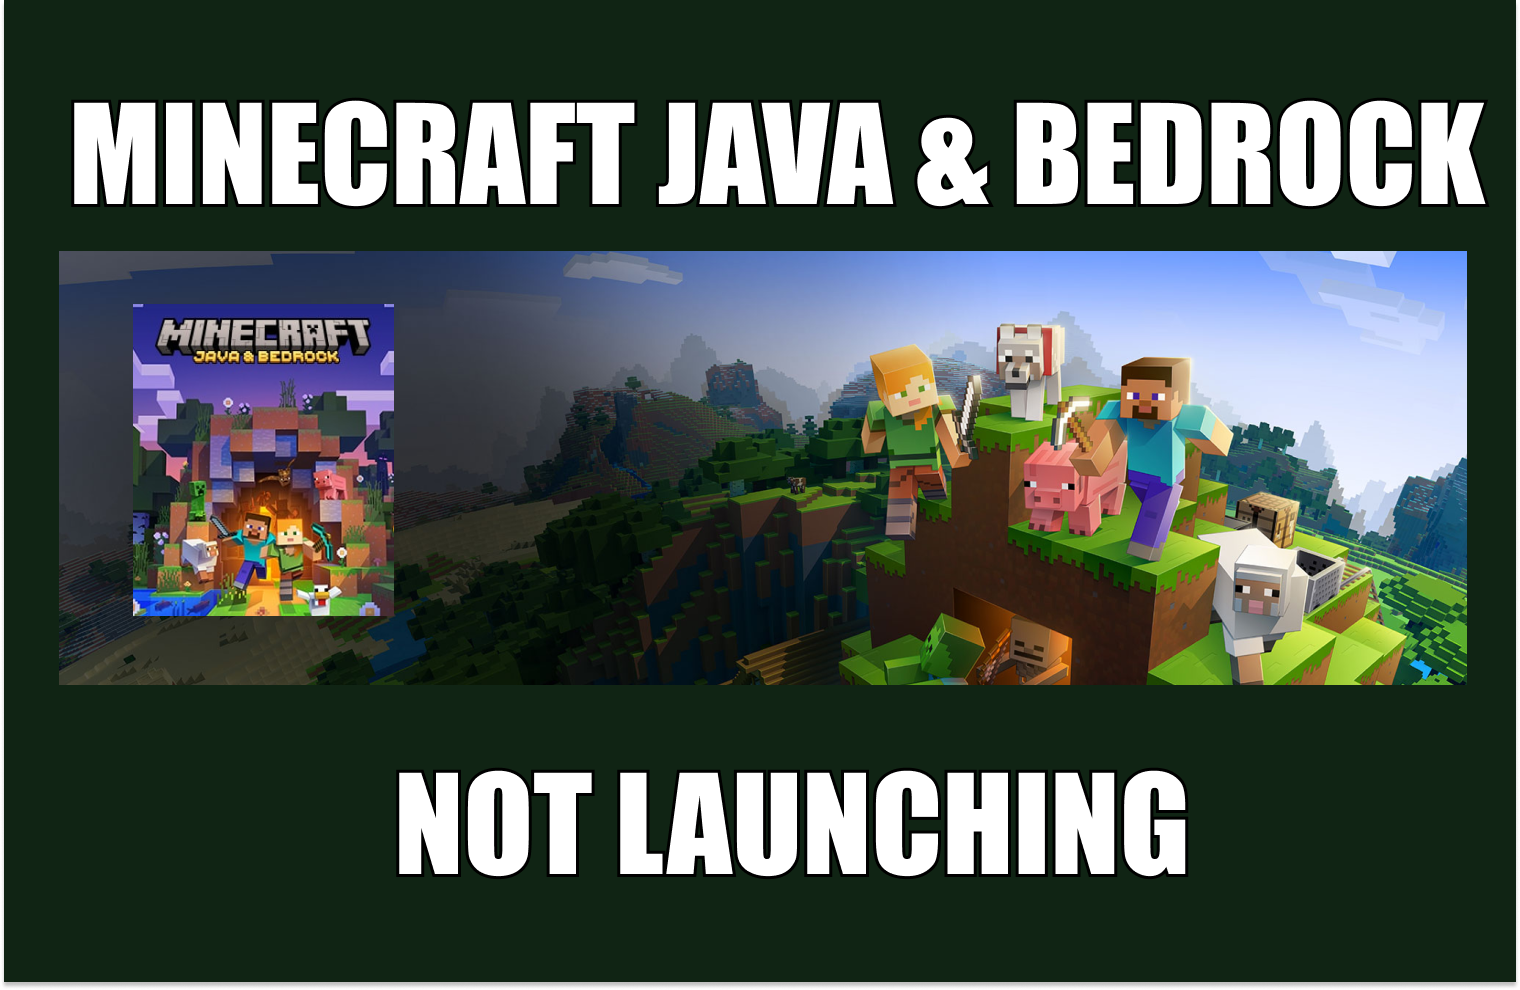 LCP: If you play Minecraft: Java Ed… - Mastodon